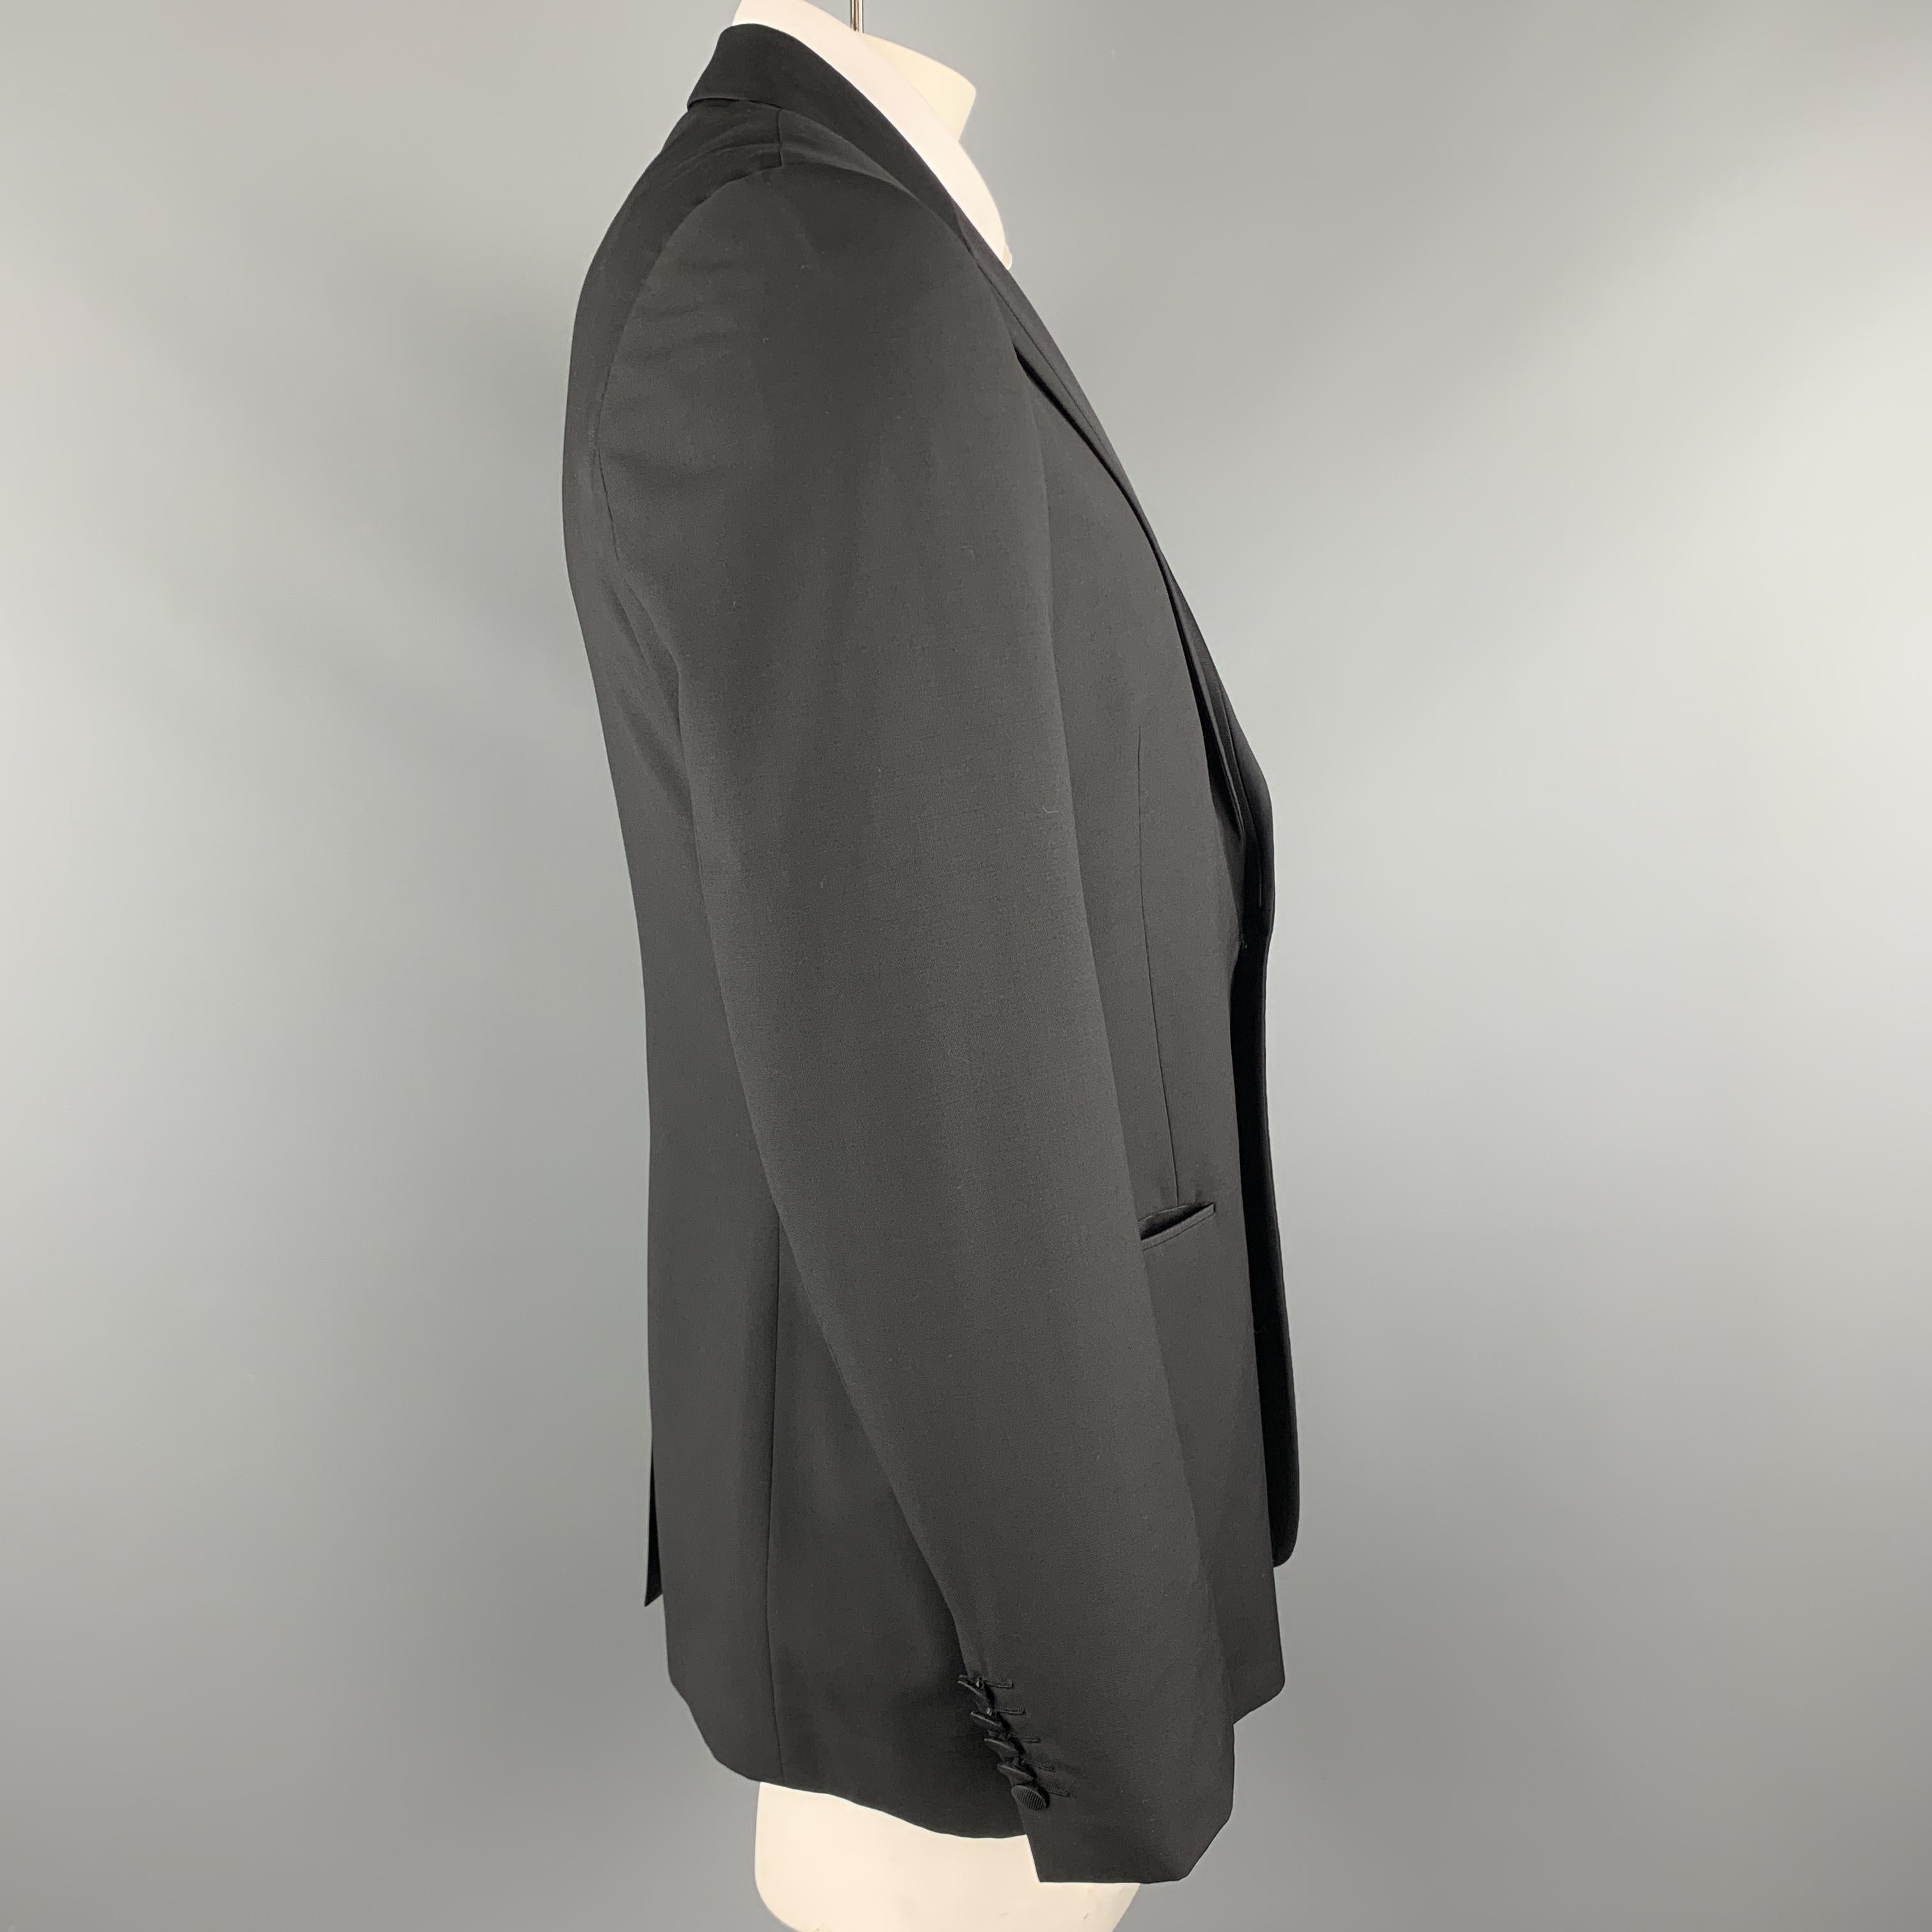 PAUL SMITH Size 42 Black Wool / Mohair Faille Detailed Peak Lapel Sport Coat 1